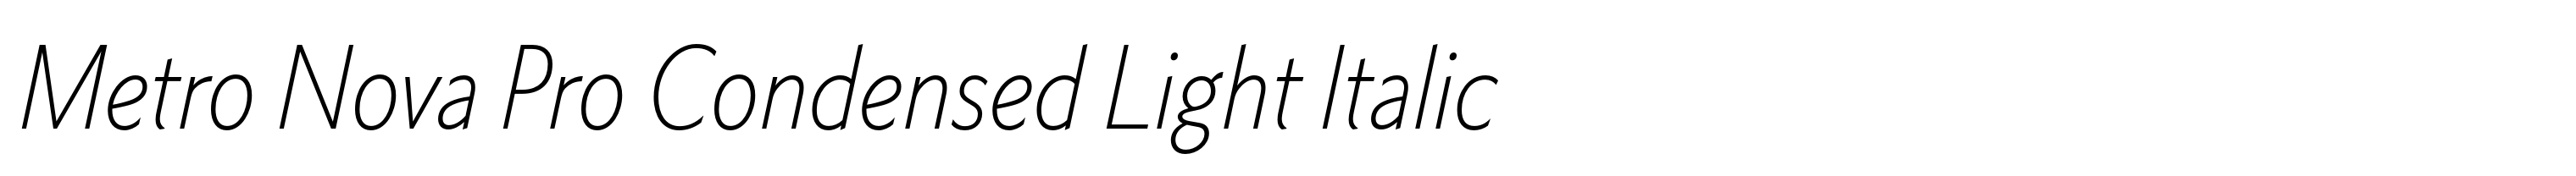 Metro Nova Pro Condensed Light Italic